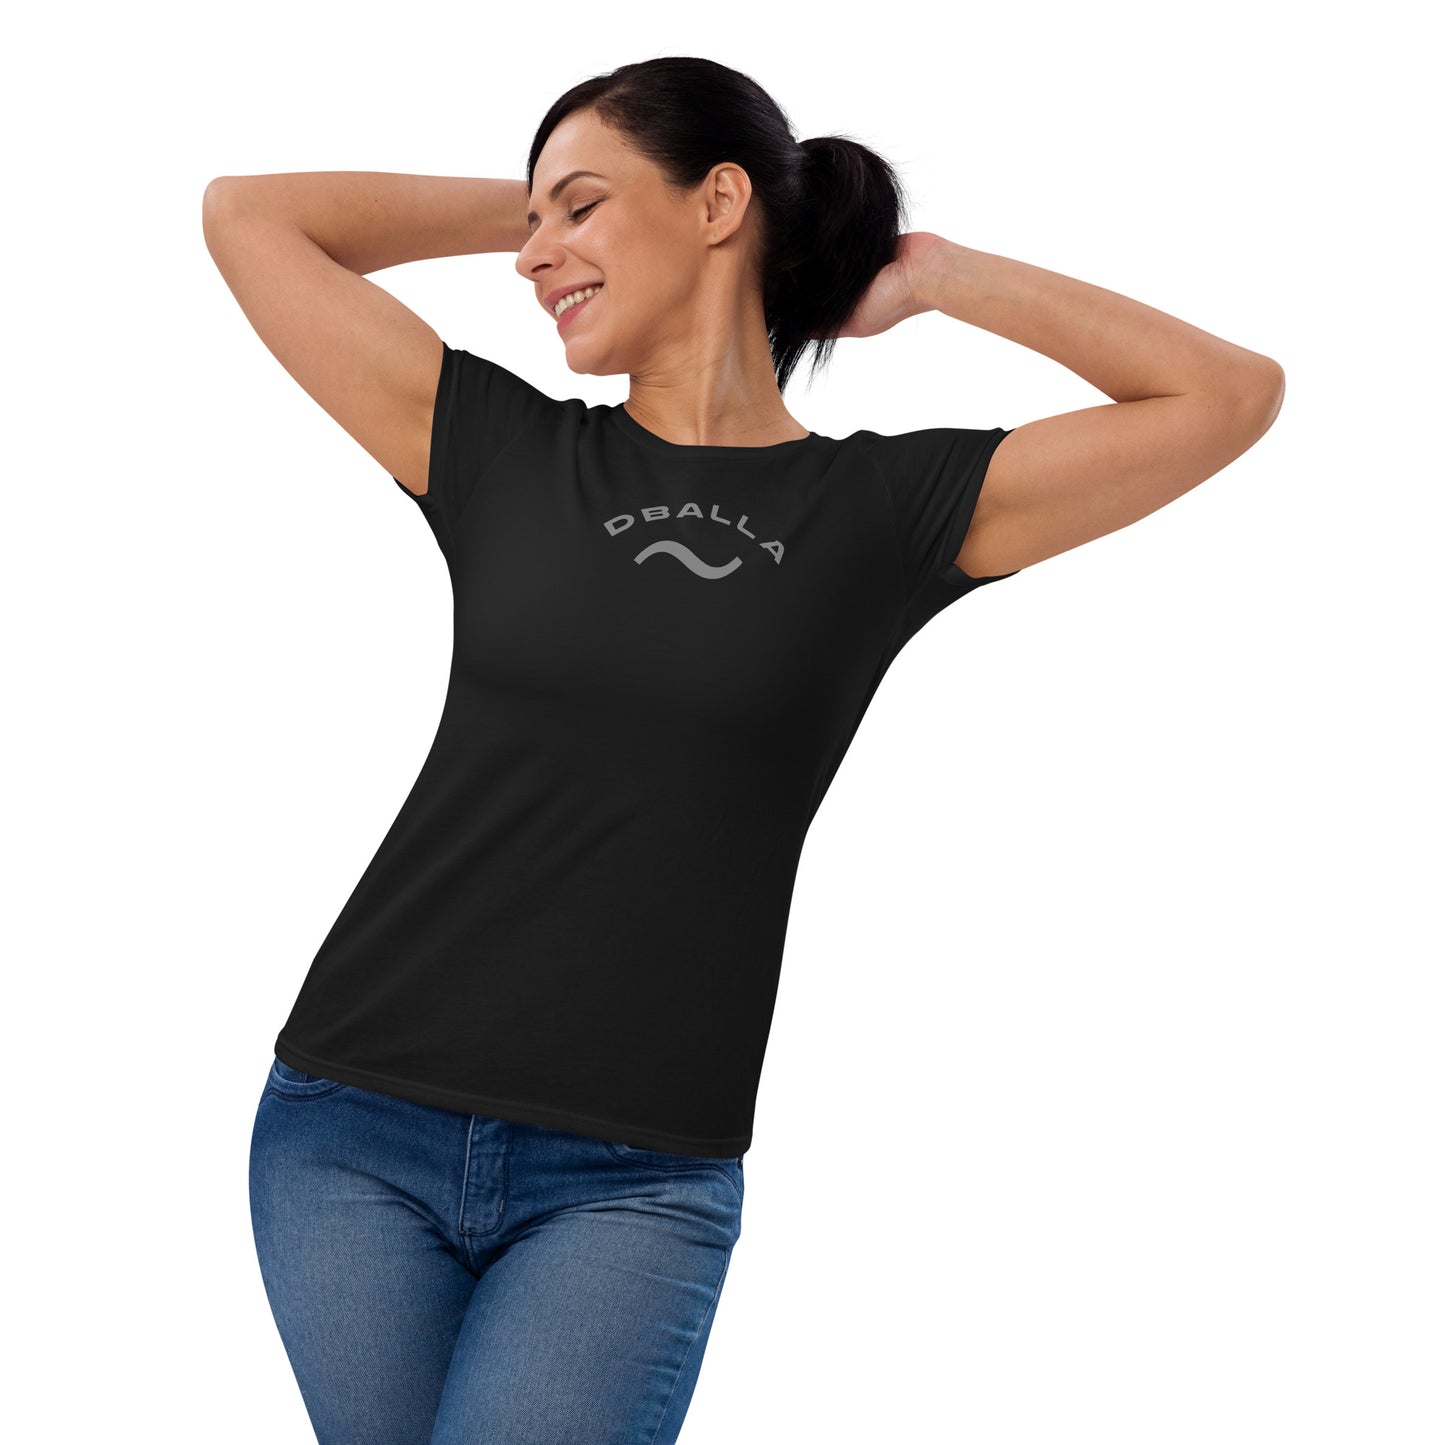 "LADY FITY" Women's short sleeve t-shirt